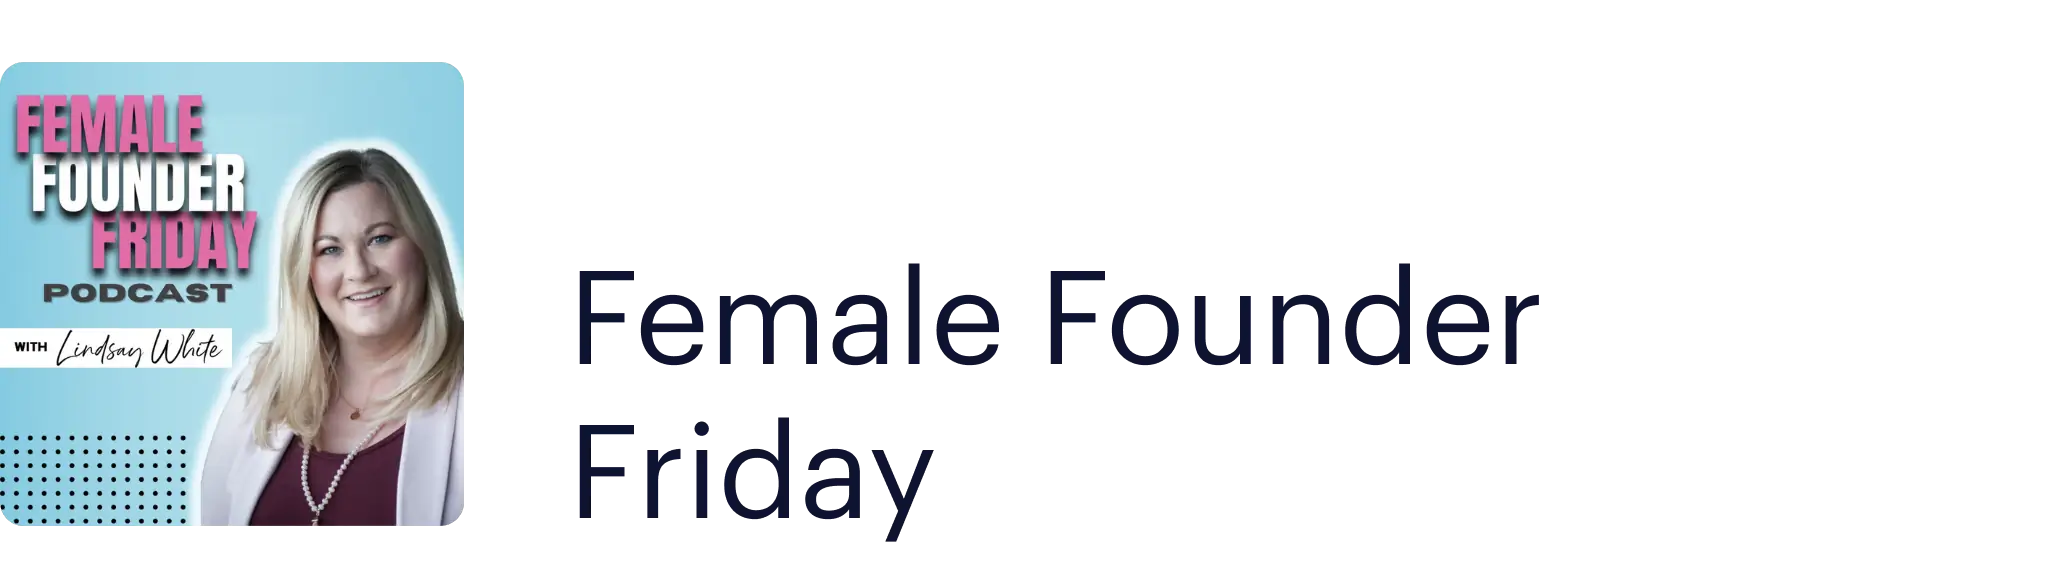 Founder Female Friday